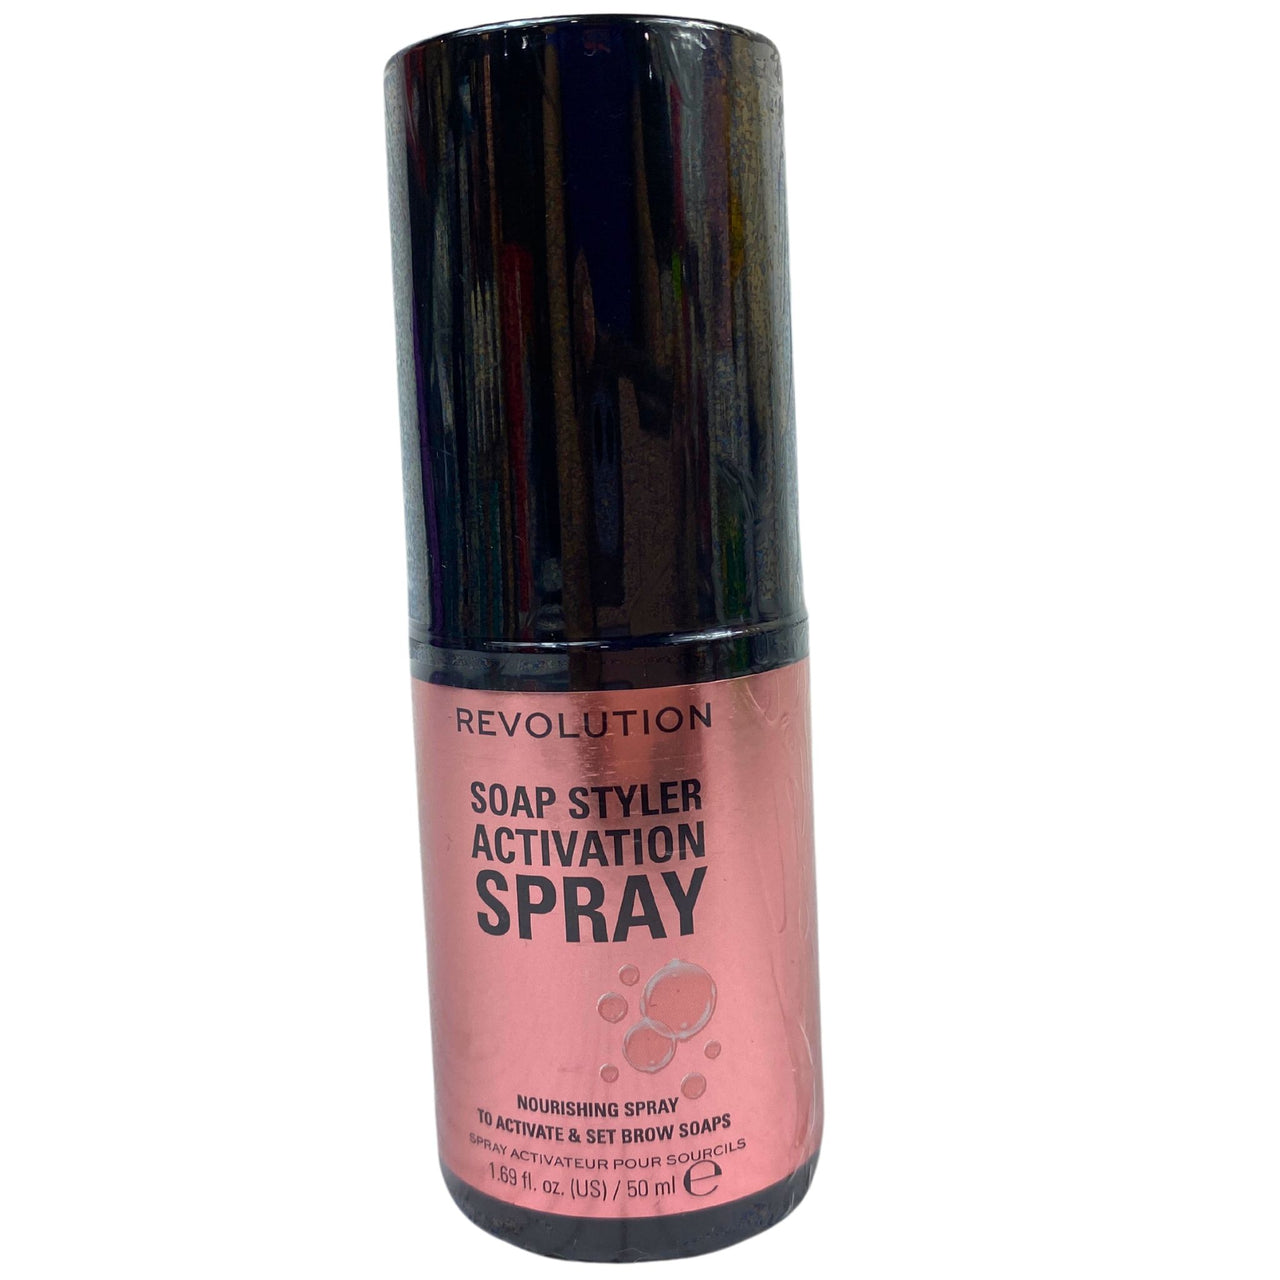 Revolution Soap Styler Activation Spray Nourishing Spray 